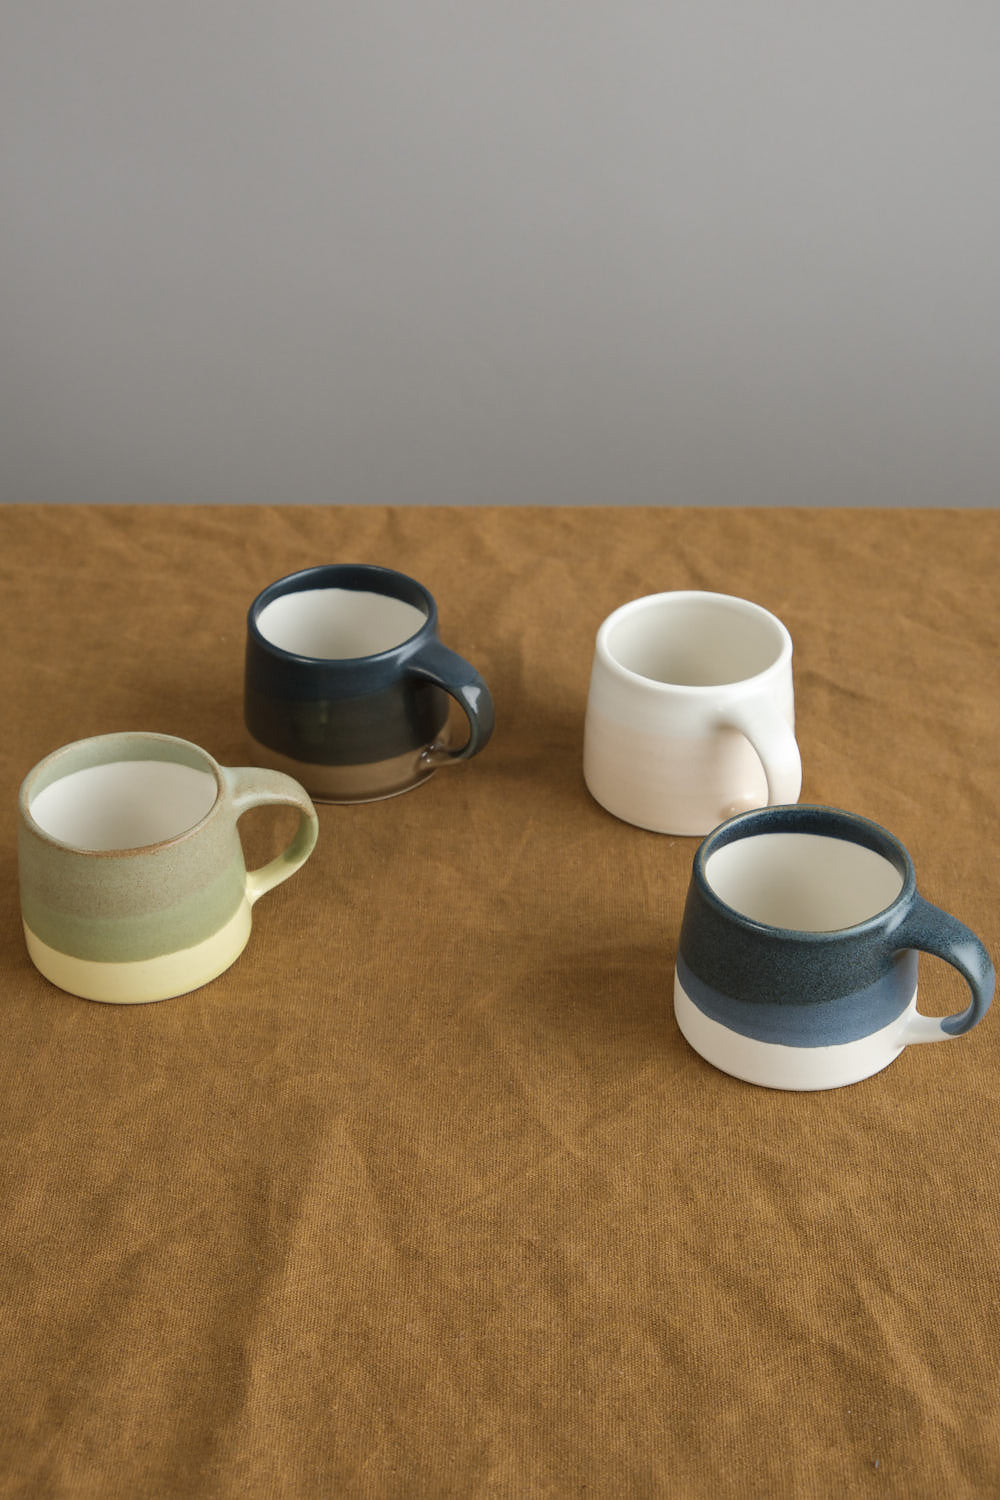 4 oz Slow Coffee Style Mugs on tbale